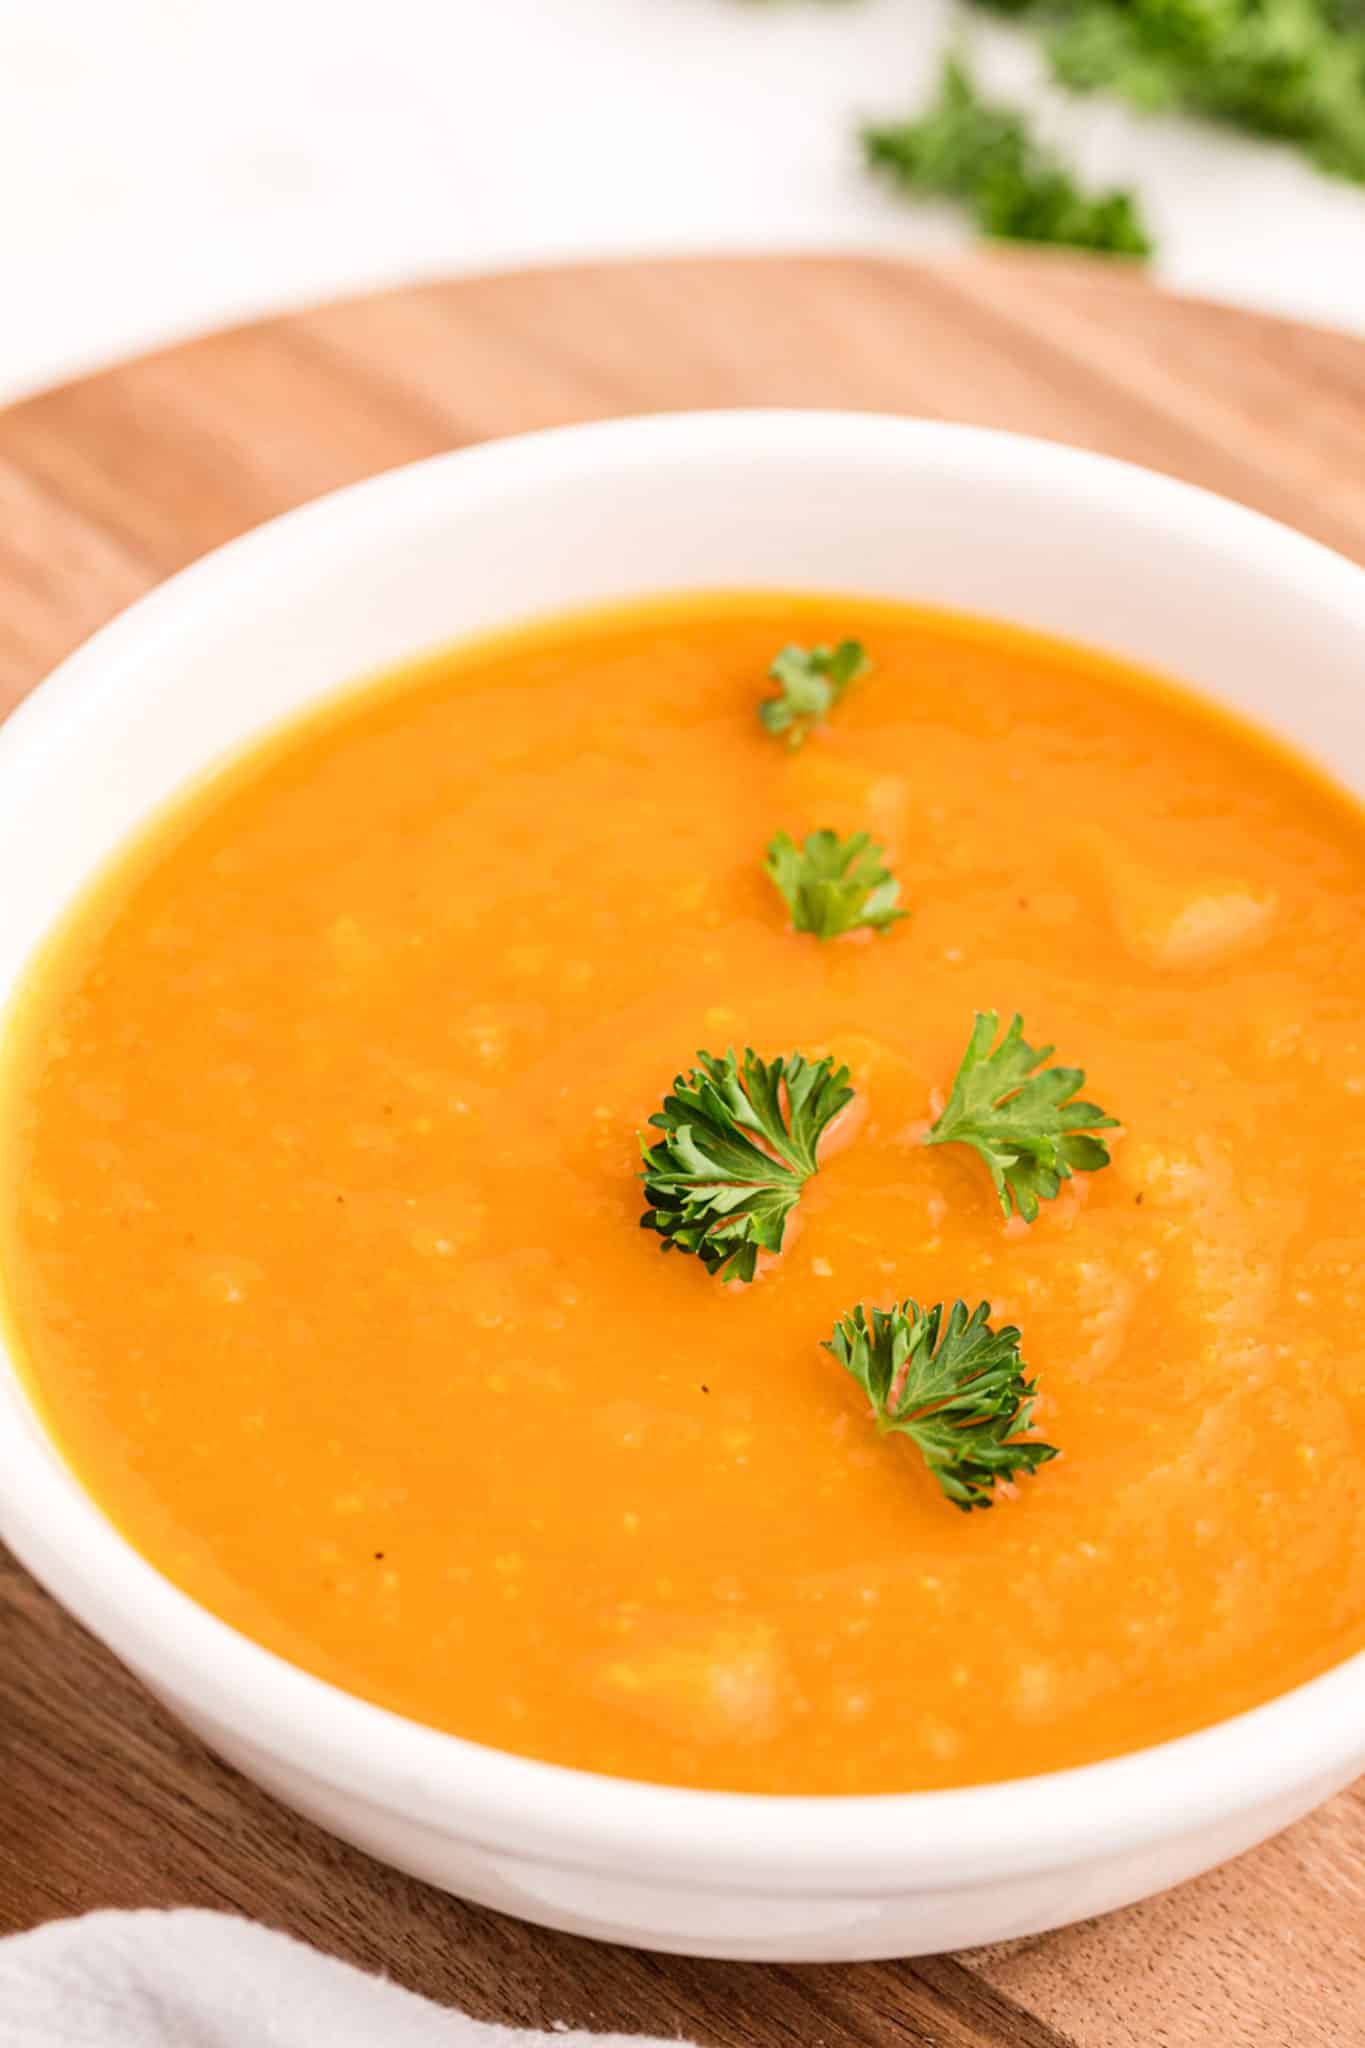 bowl of creamy orange colored soup.